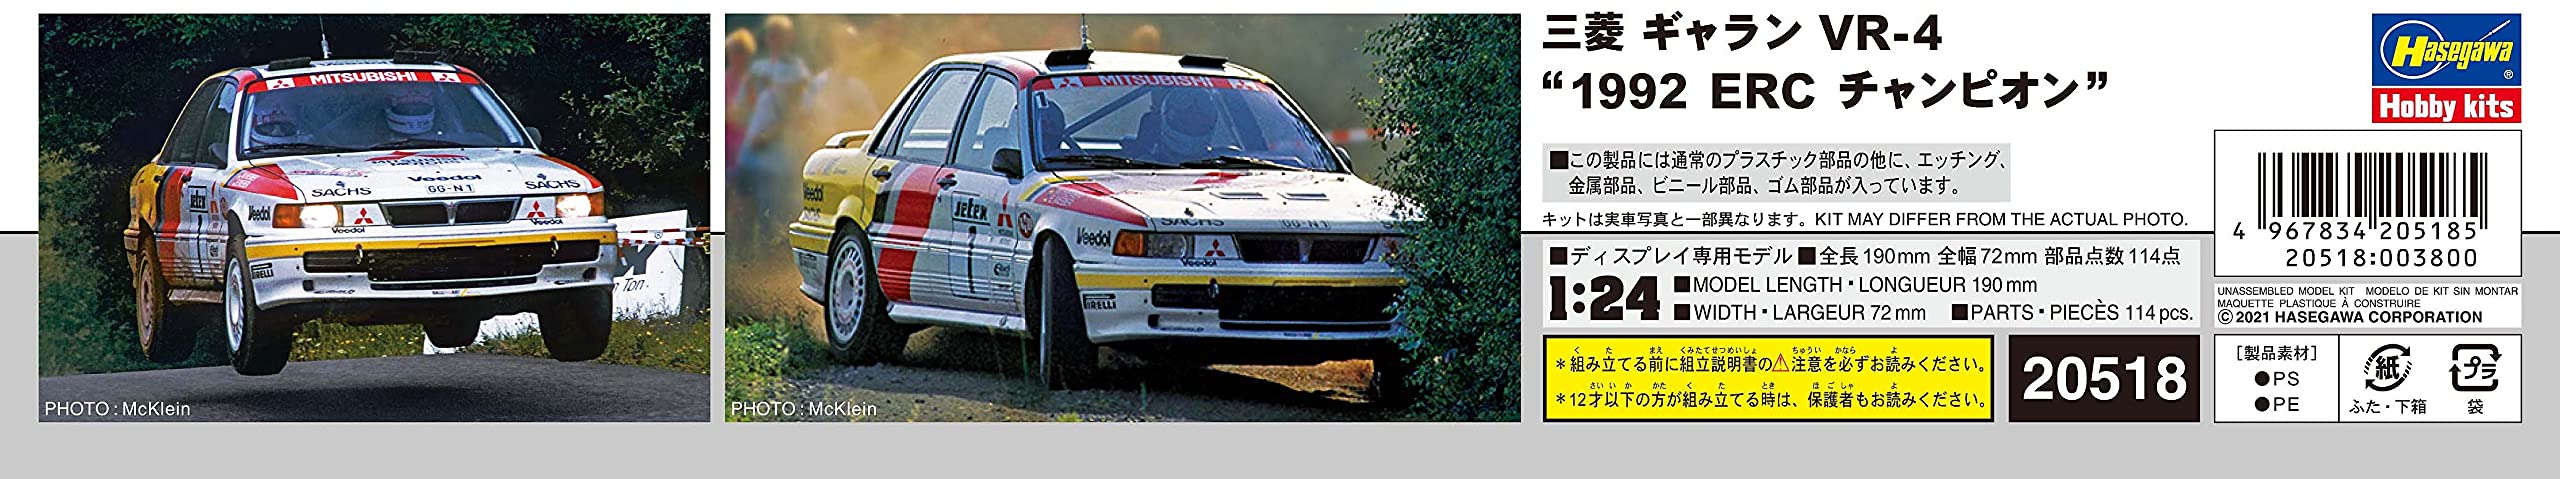 Hasegawa 1/24 Mitsubishi Galant Vr-4 1992 Erc Champion Japanese Scale Racing Cars